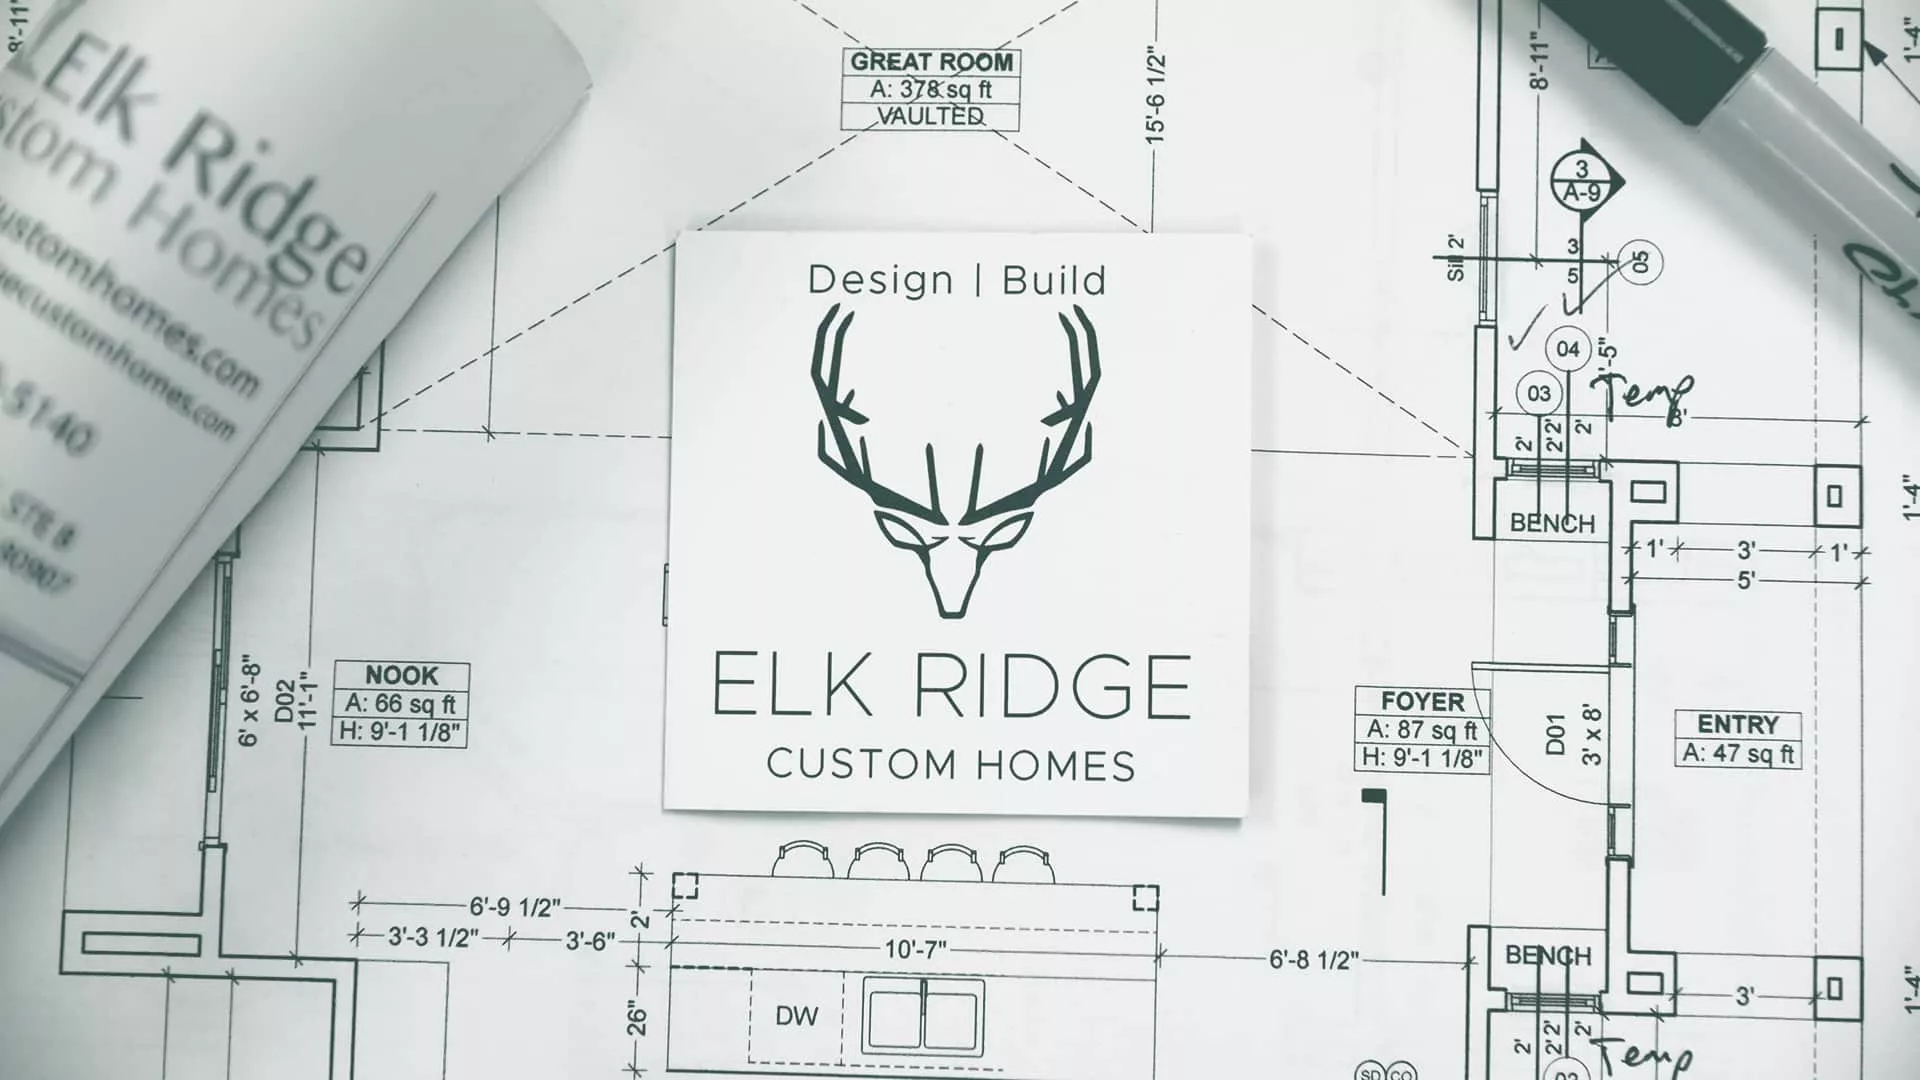 elk ridge custom homes card on plans